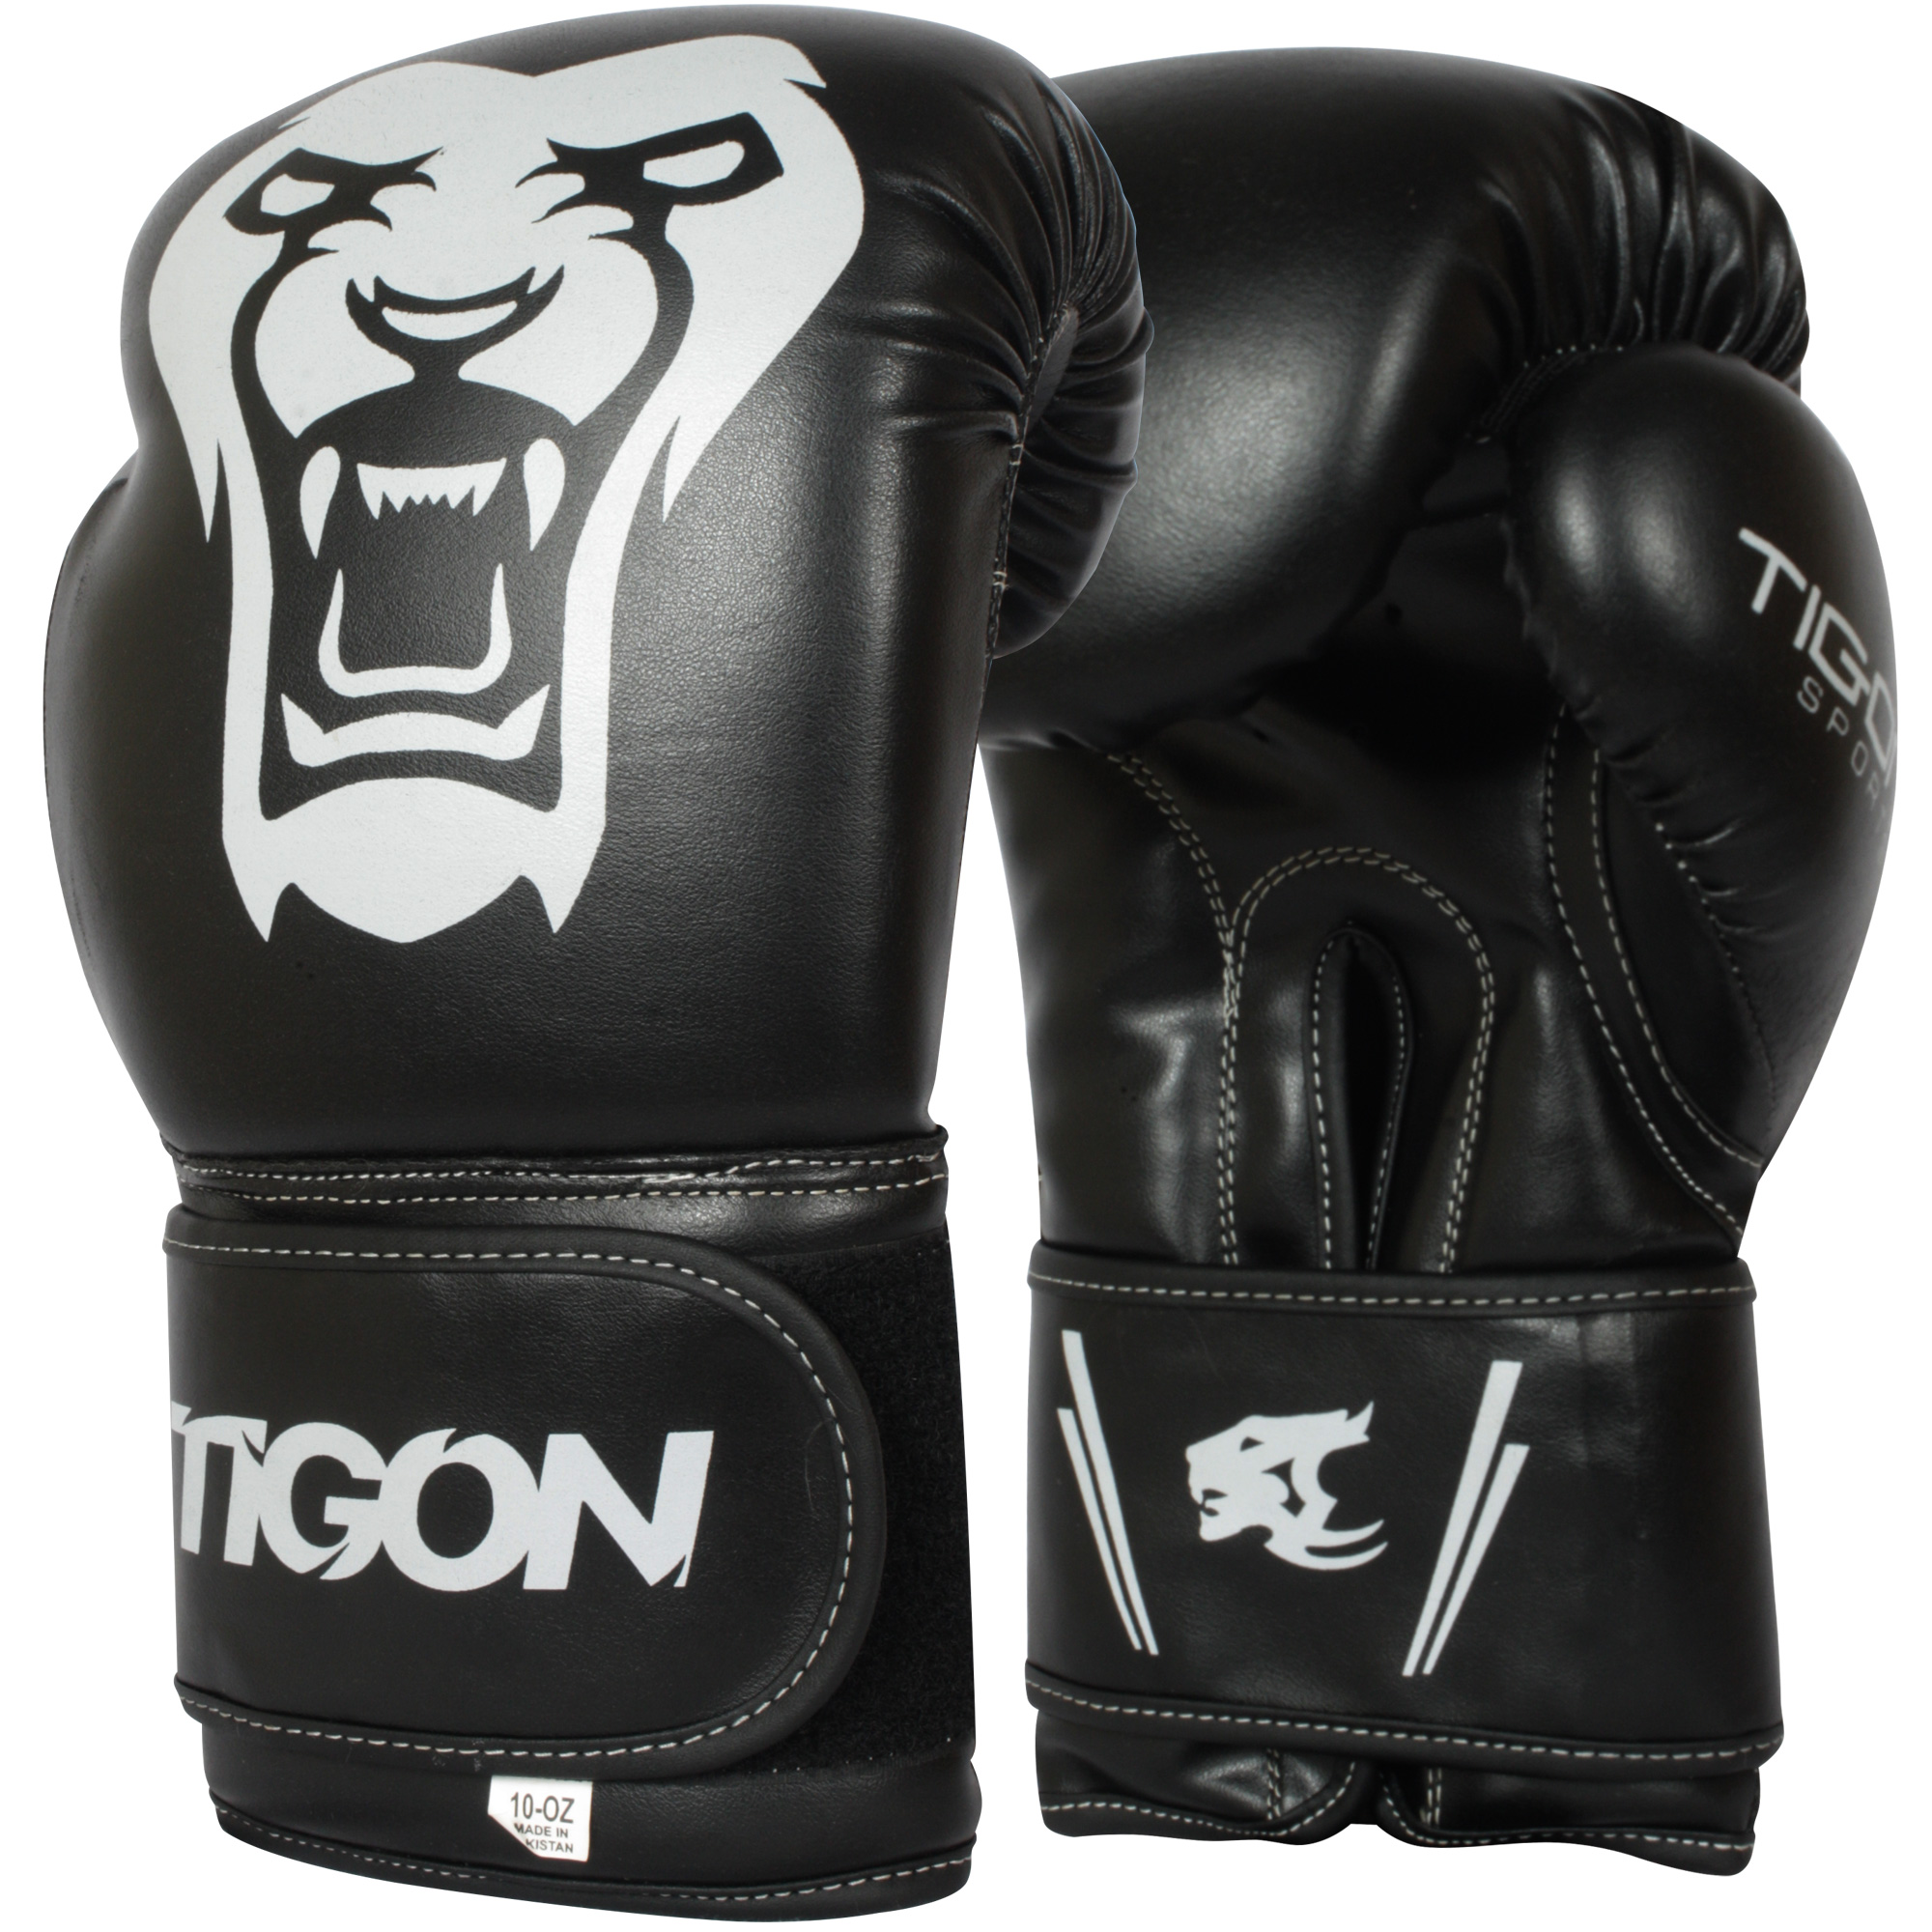 Tigon Boxing Gloves Punching Mitts MMA Muay thai Training Sparring kickboxing 